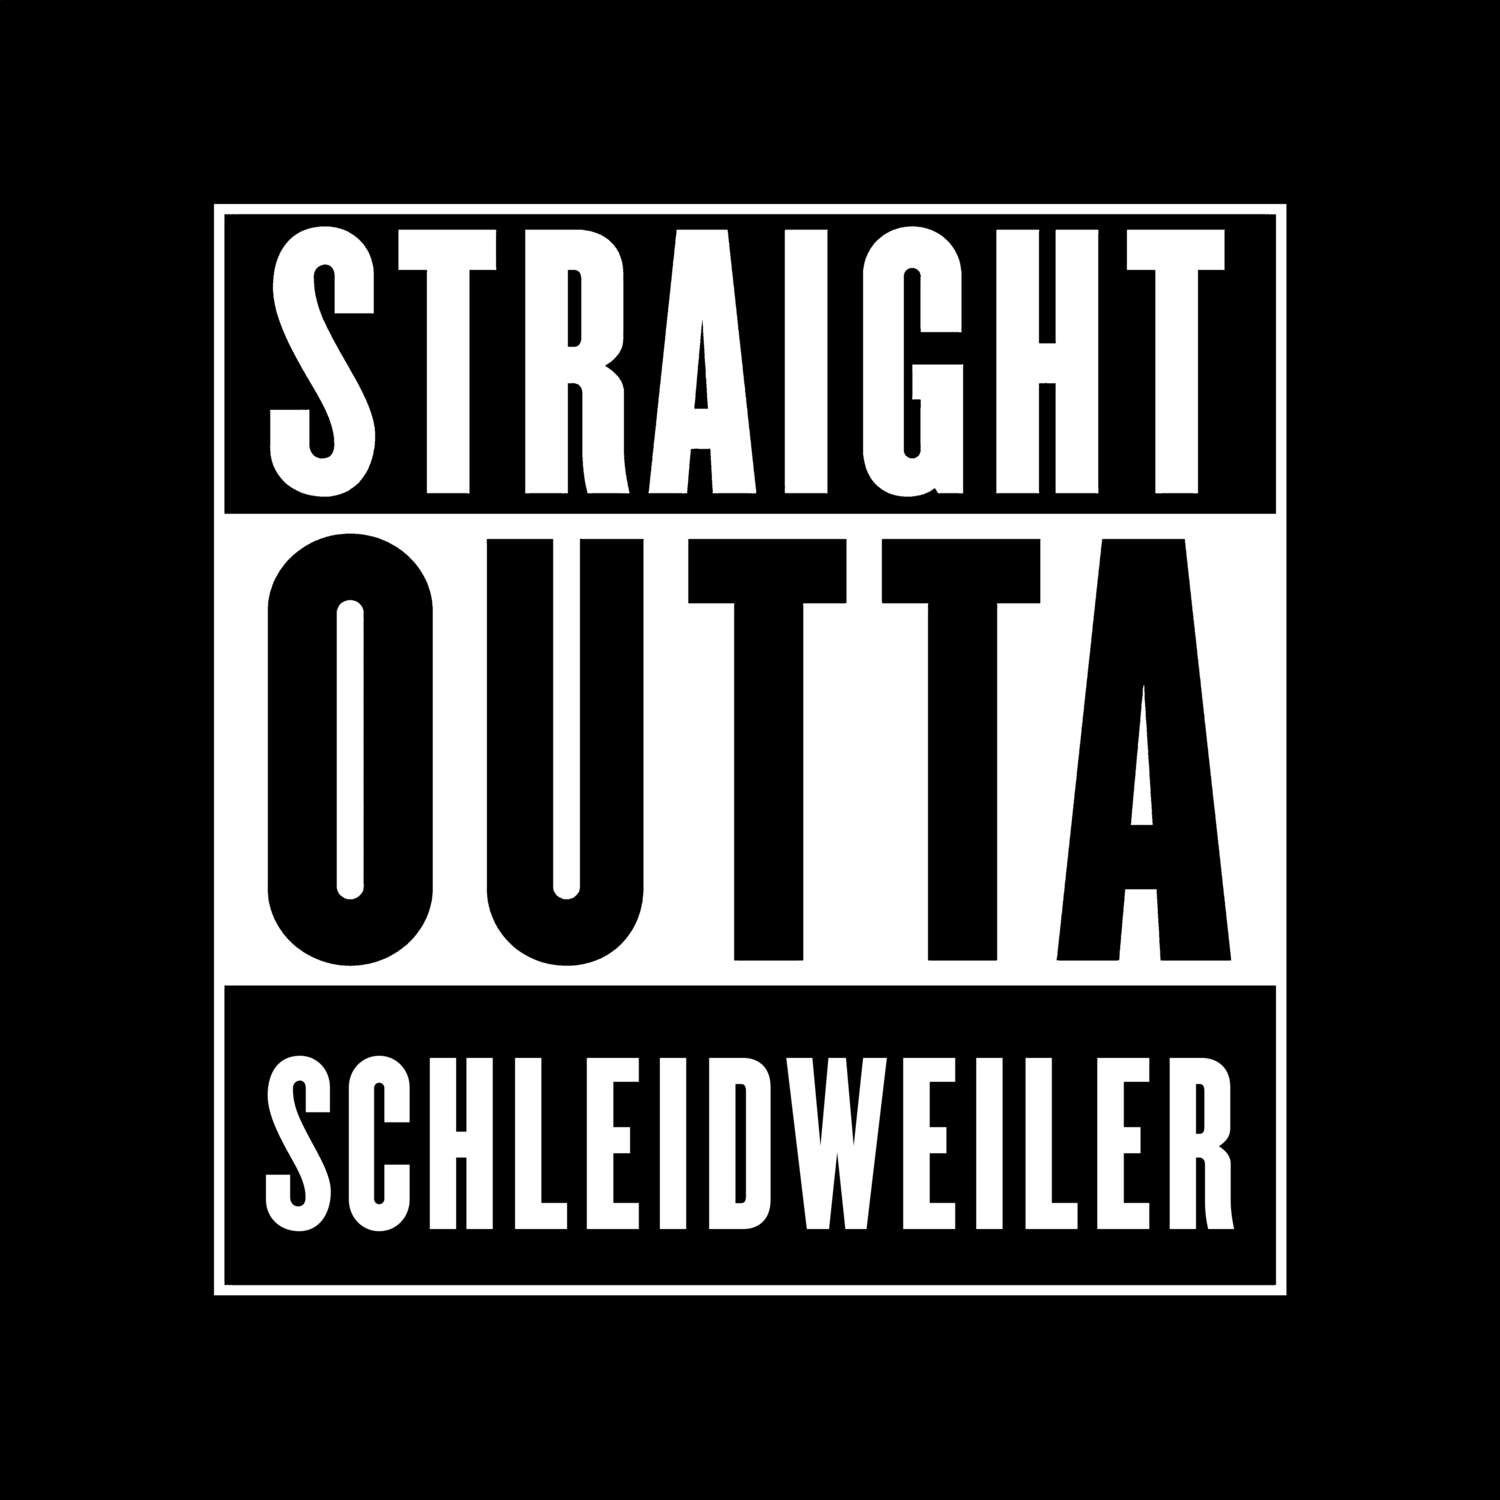 Schleidweiler T-Shirt »Straight Outta«